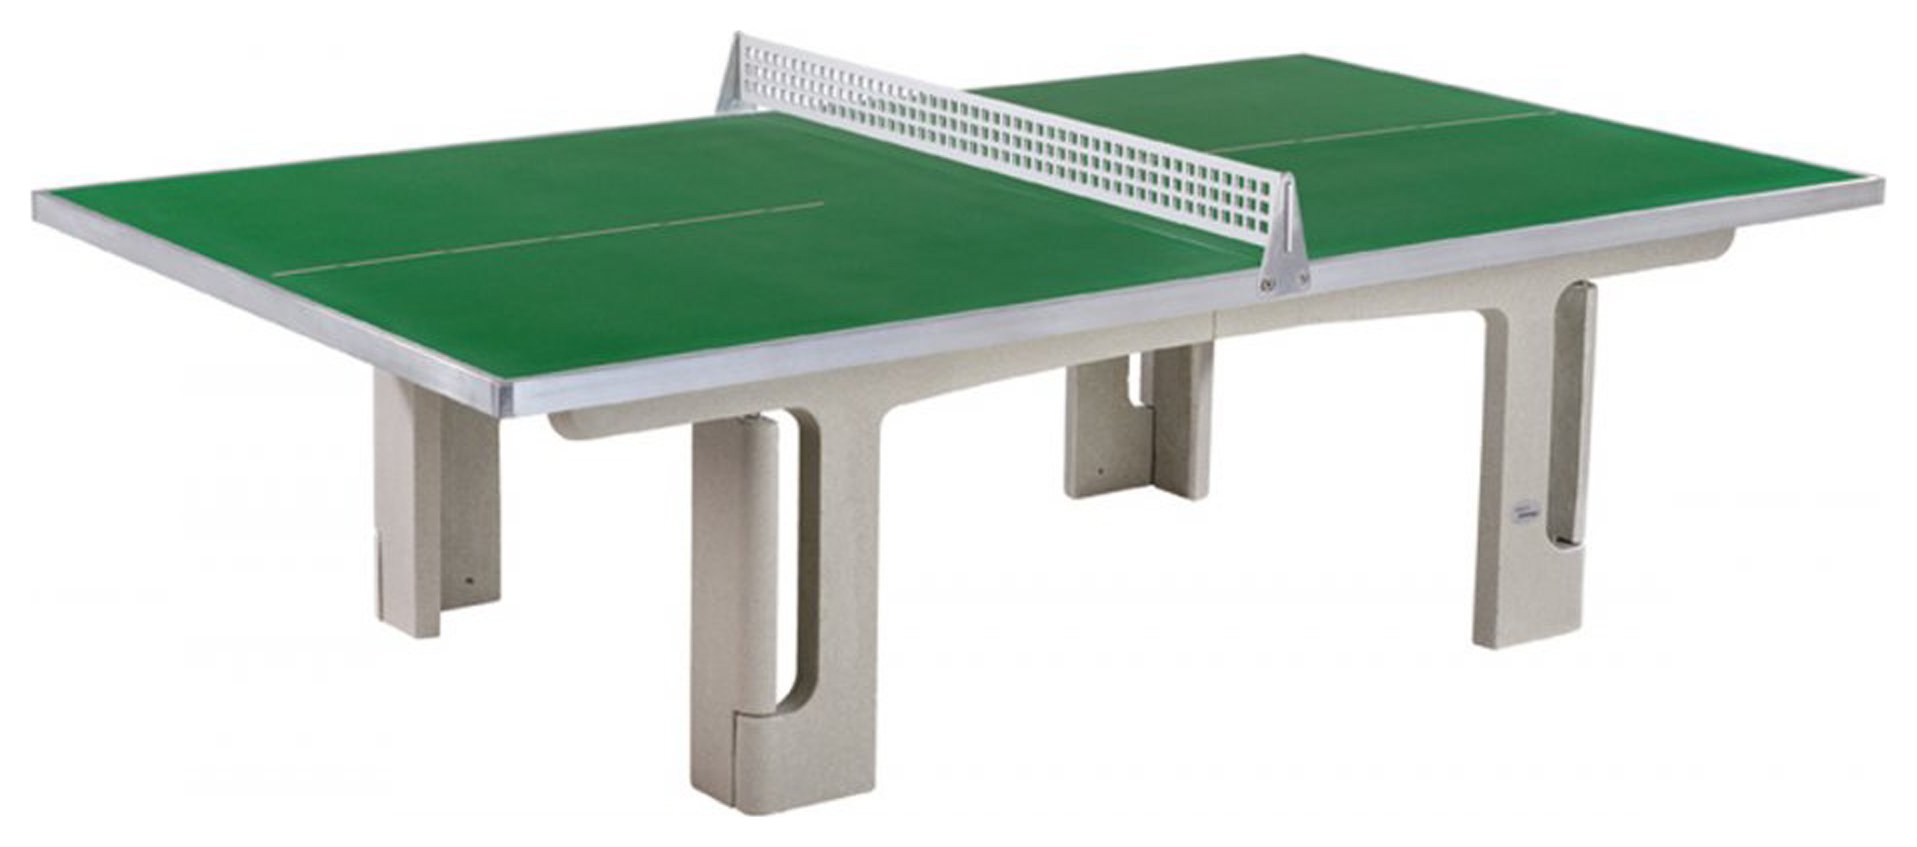 Butterfly - Park Concrete Table Tennis Review